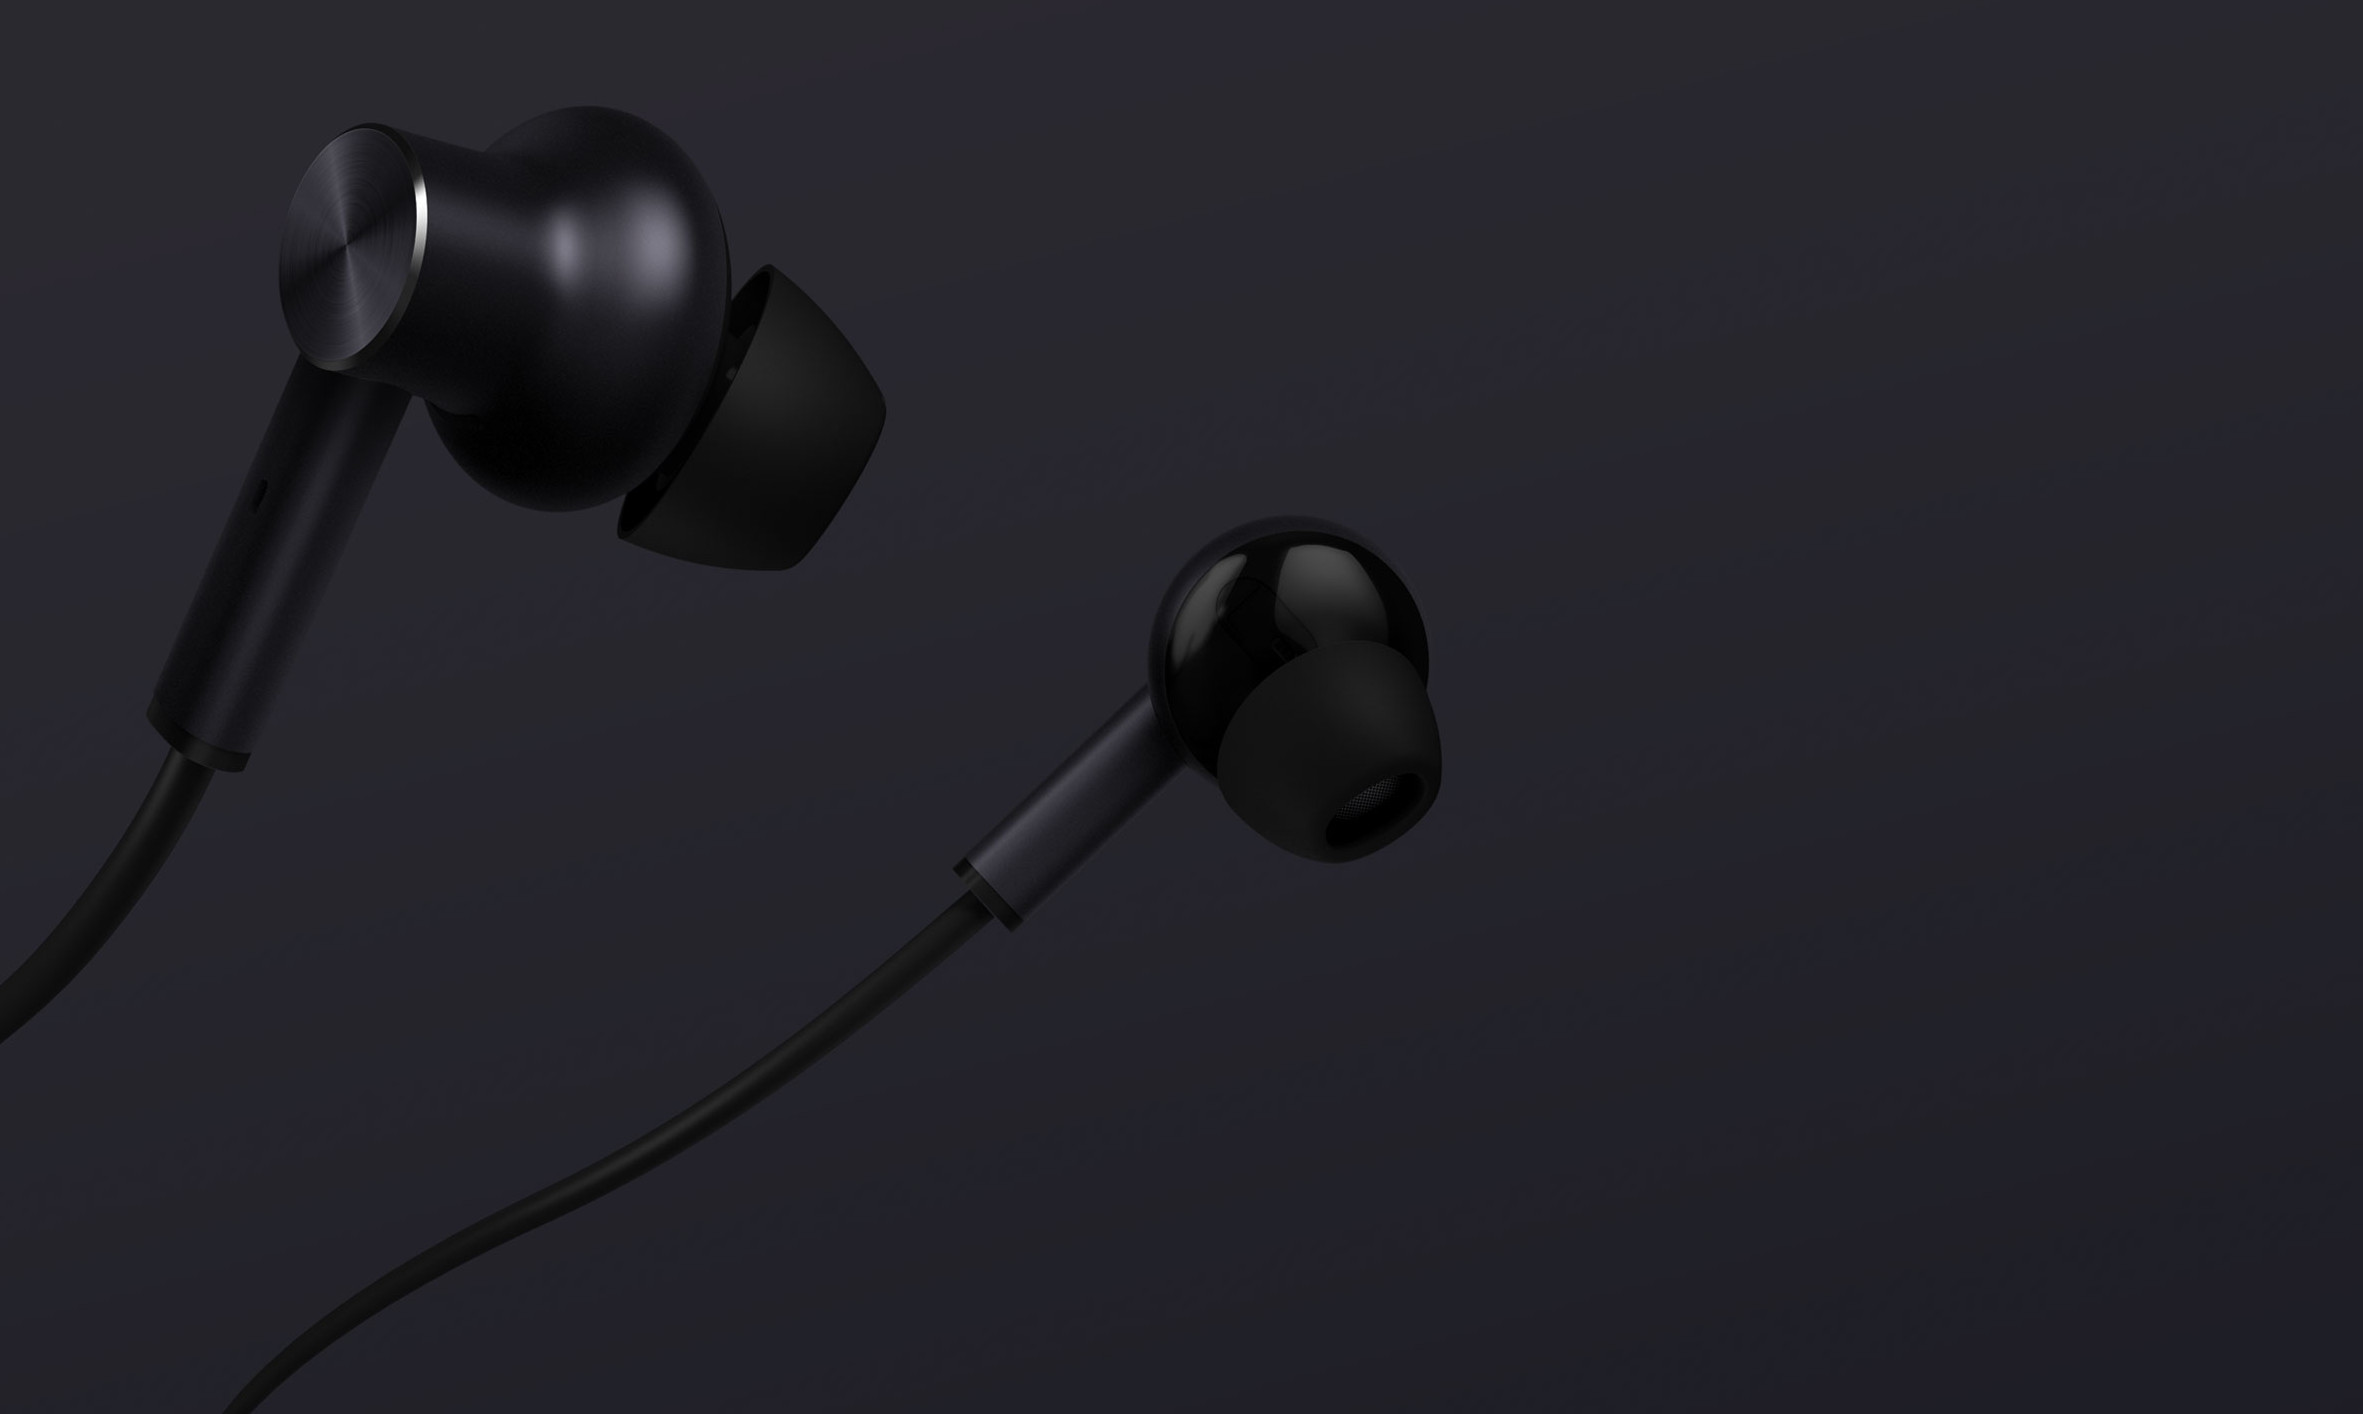 xiaomi-mi-noise-cancelling-headphones-3.jpg